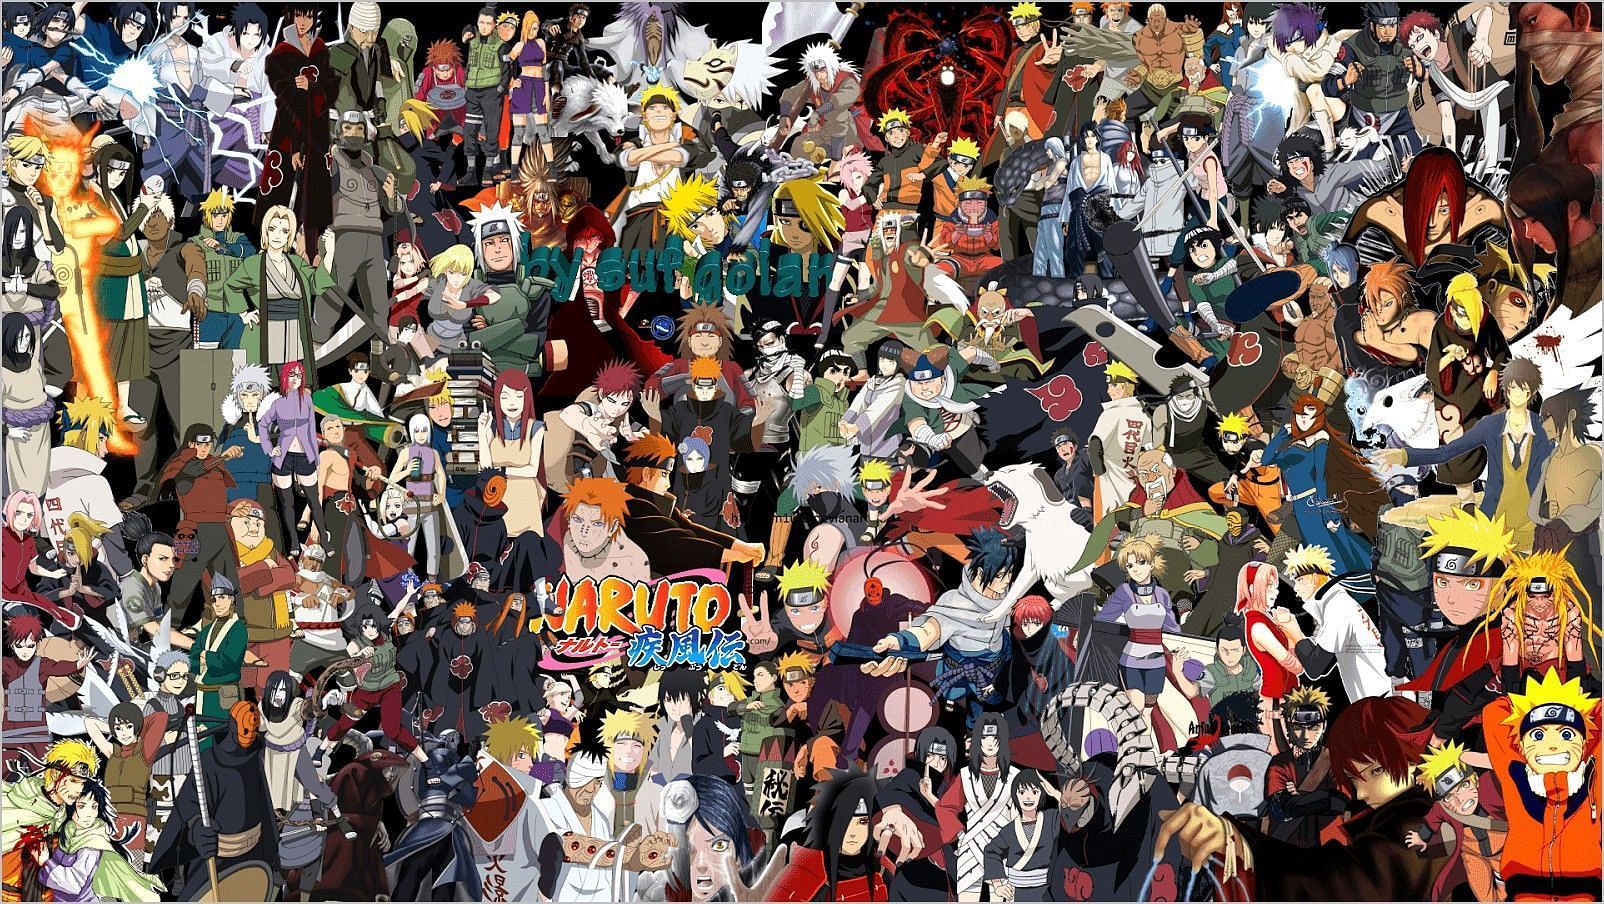 All Naruto characters (Image credits: EADEA)